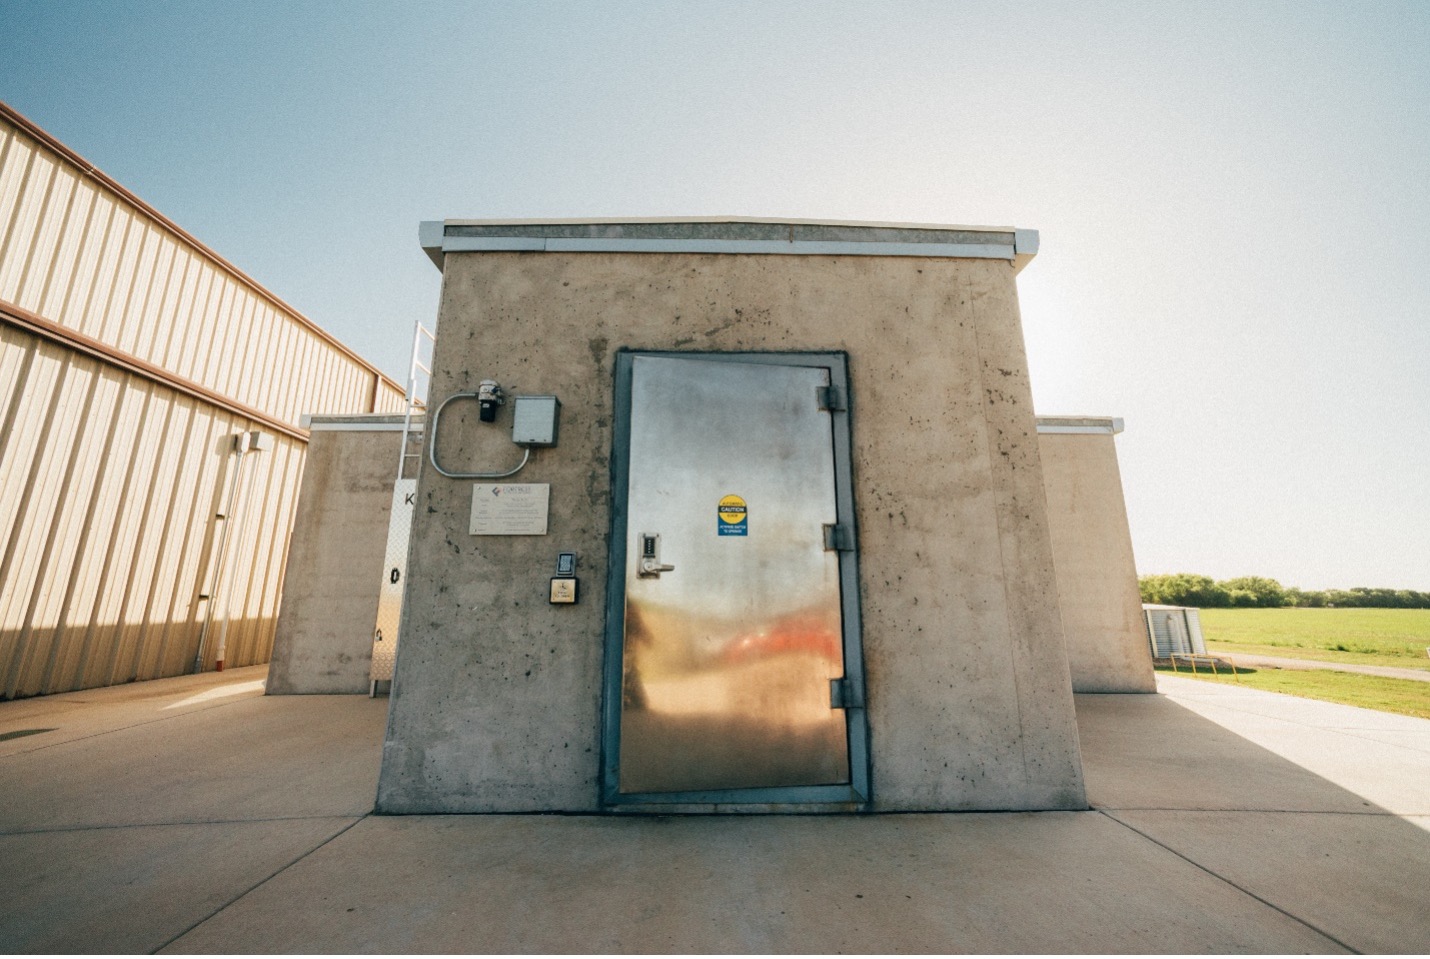 A blast resistant precast concrete building with blast and fire-resistant door